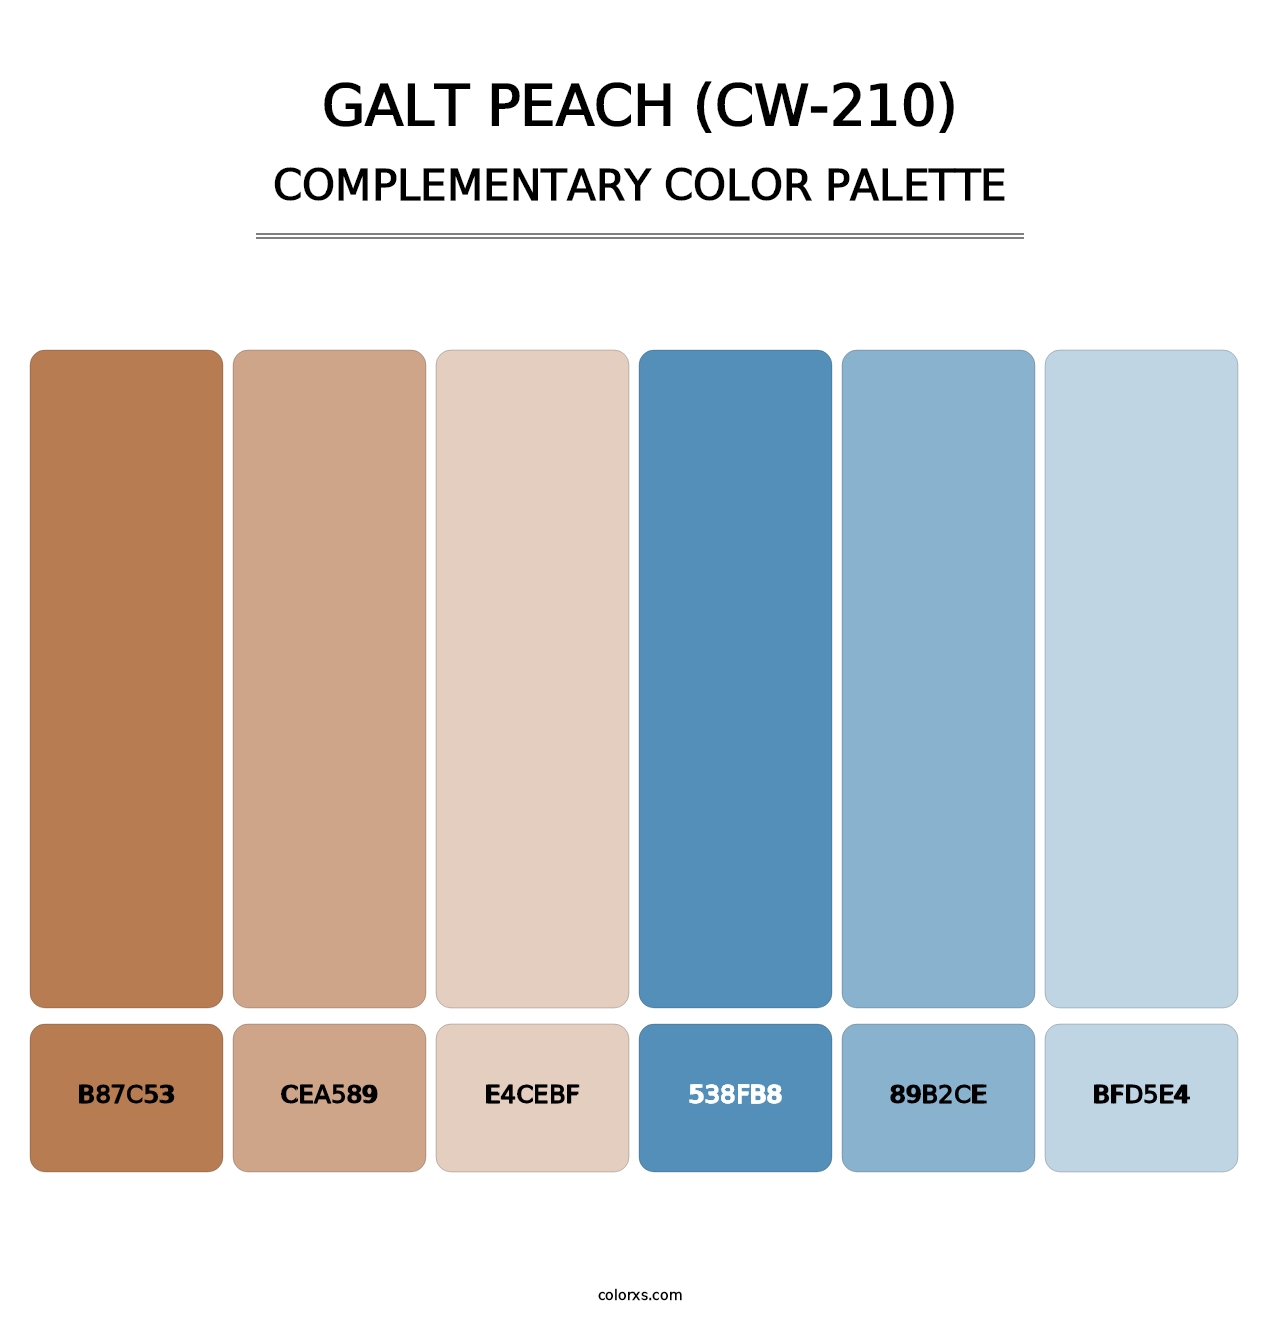 Galt Peach (CW-210) - Complementary Color Palette